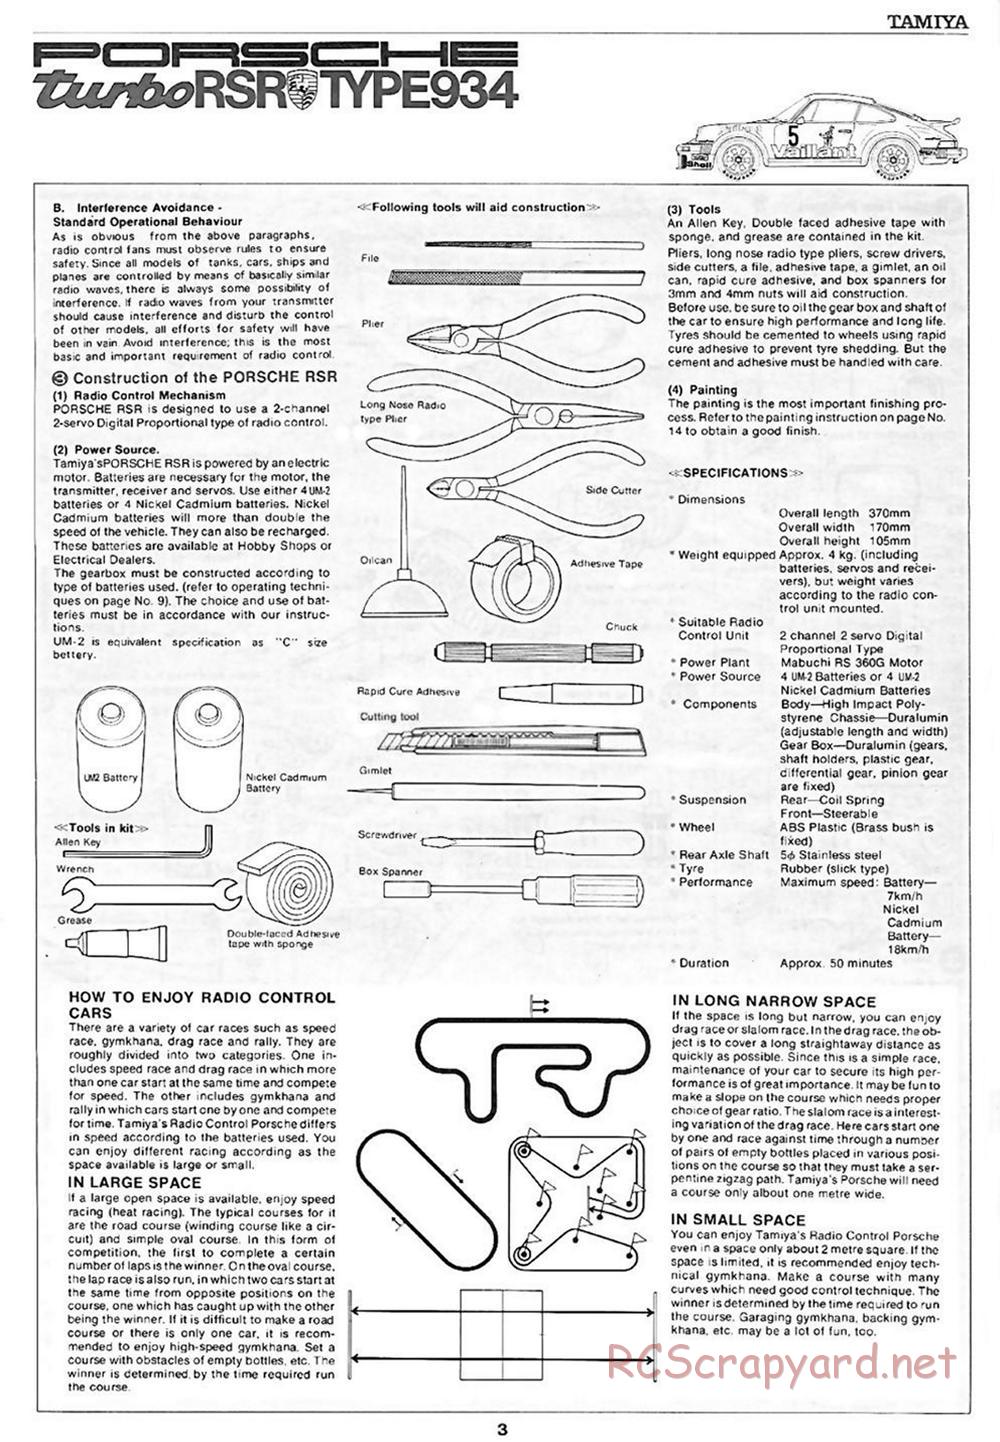 Tamiya - Porsche 934 Turbo RSR - 58001 - Manual - Page 3